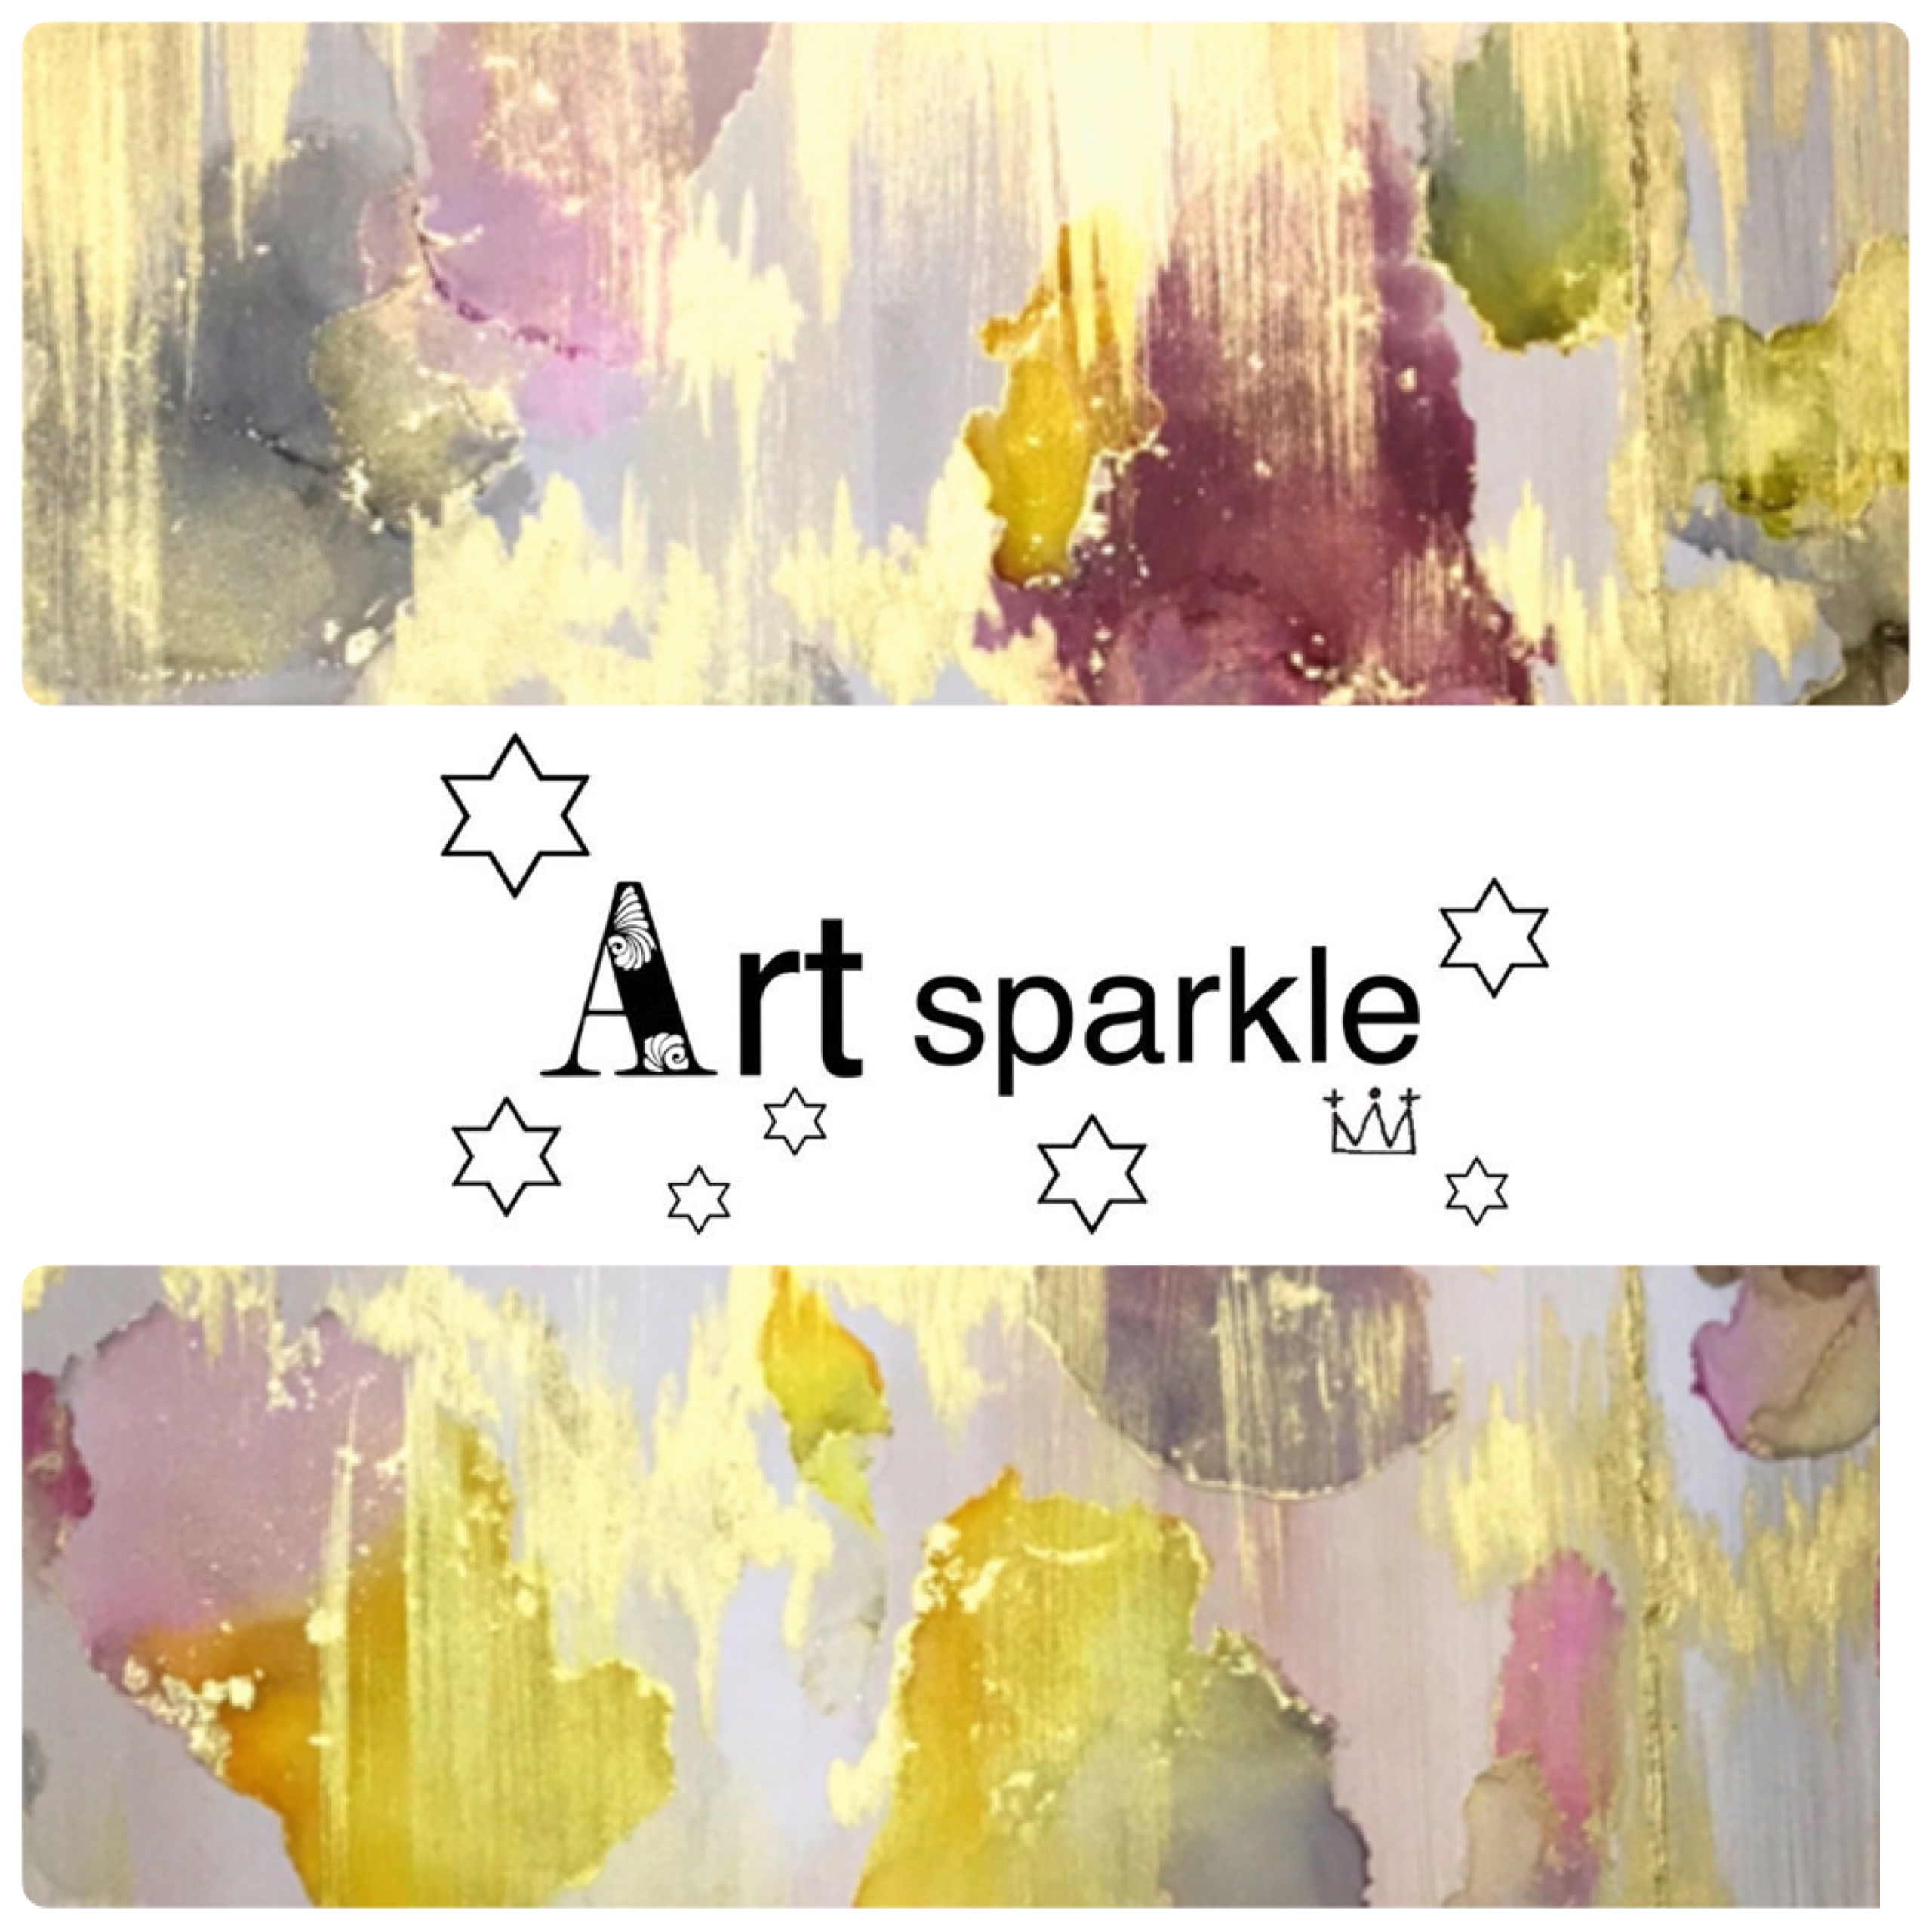 Art sparkle